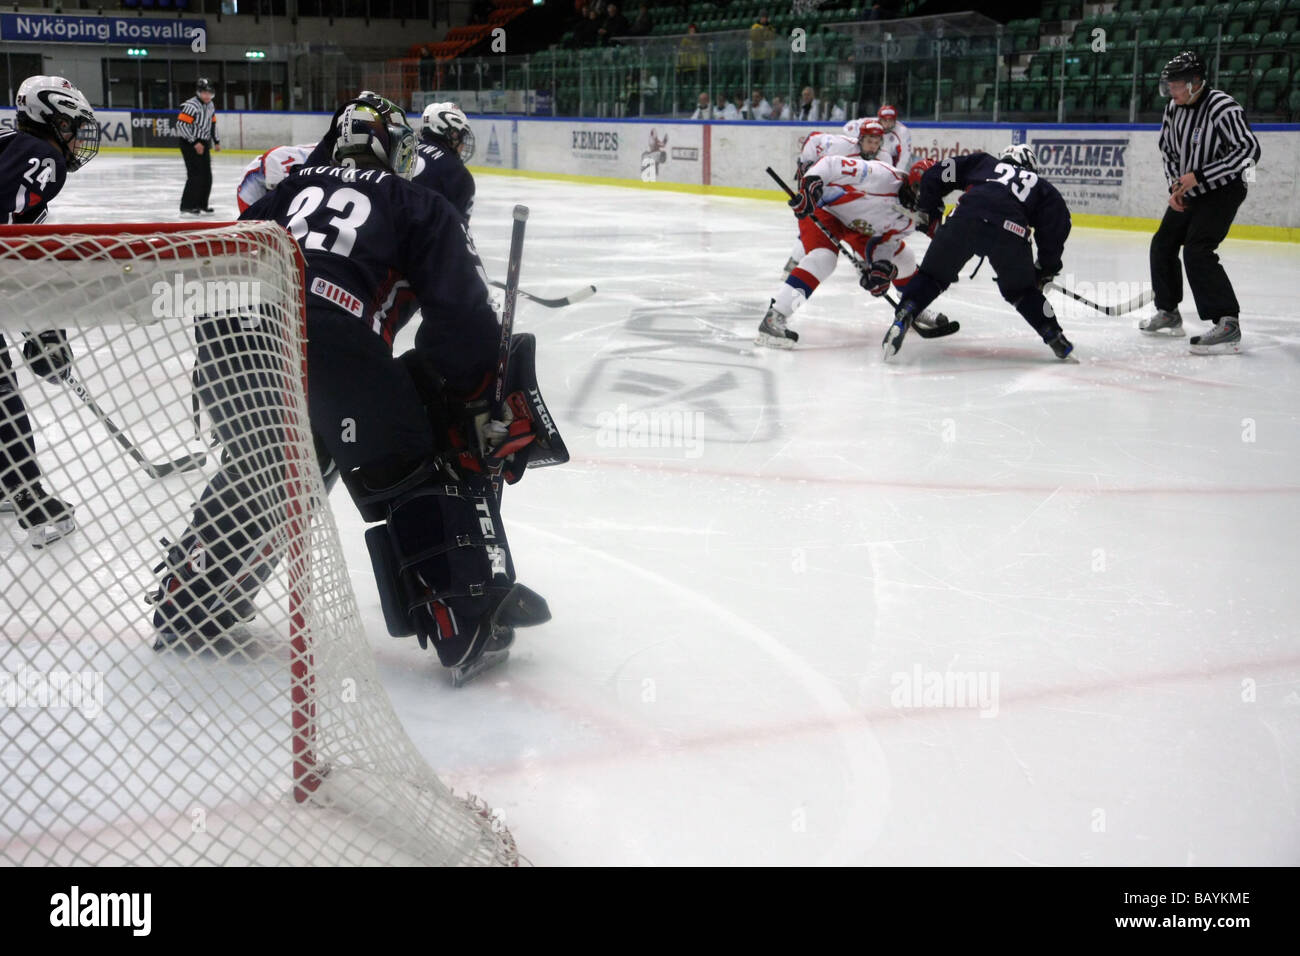 U18 ice-hockey game between USA and Russia. Stock Photo